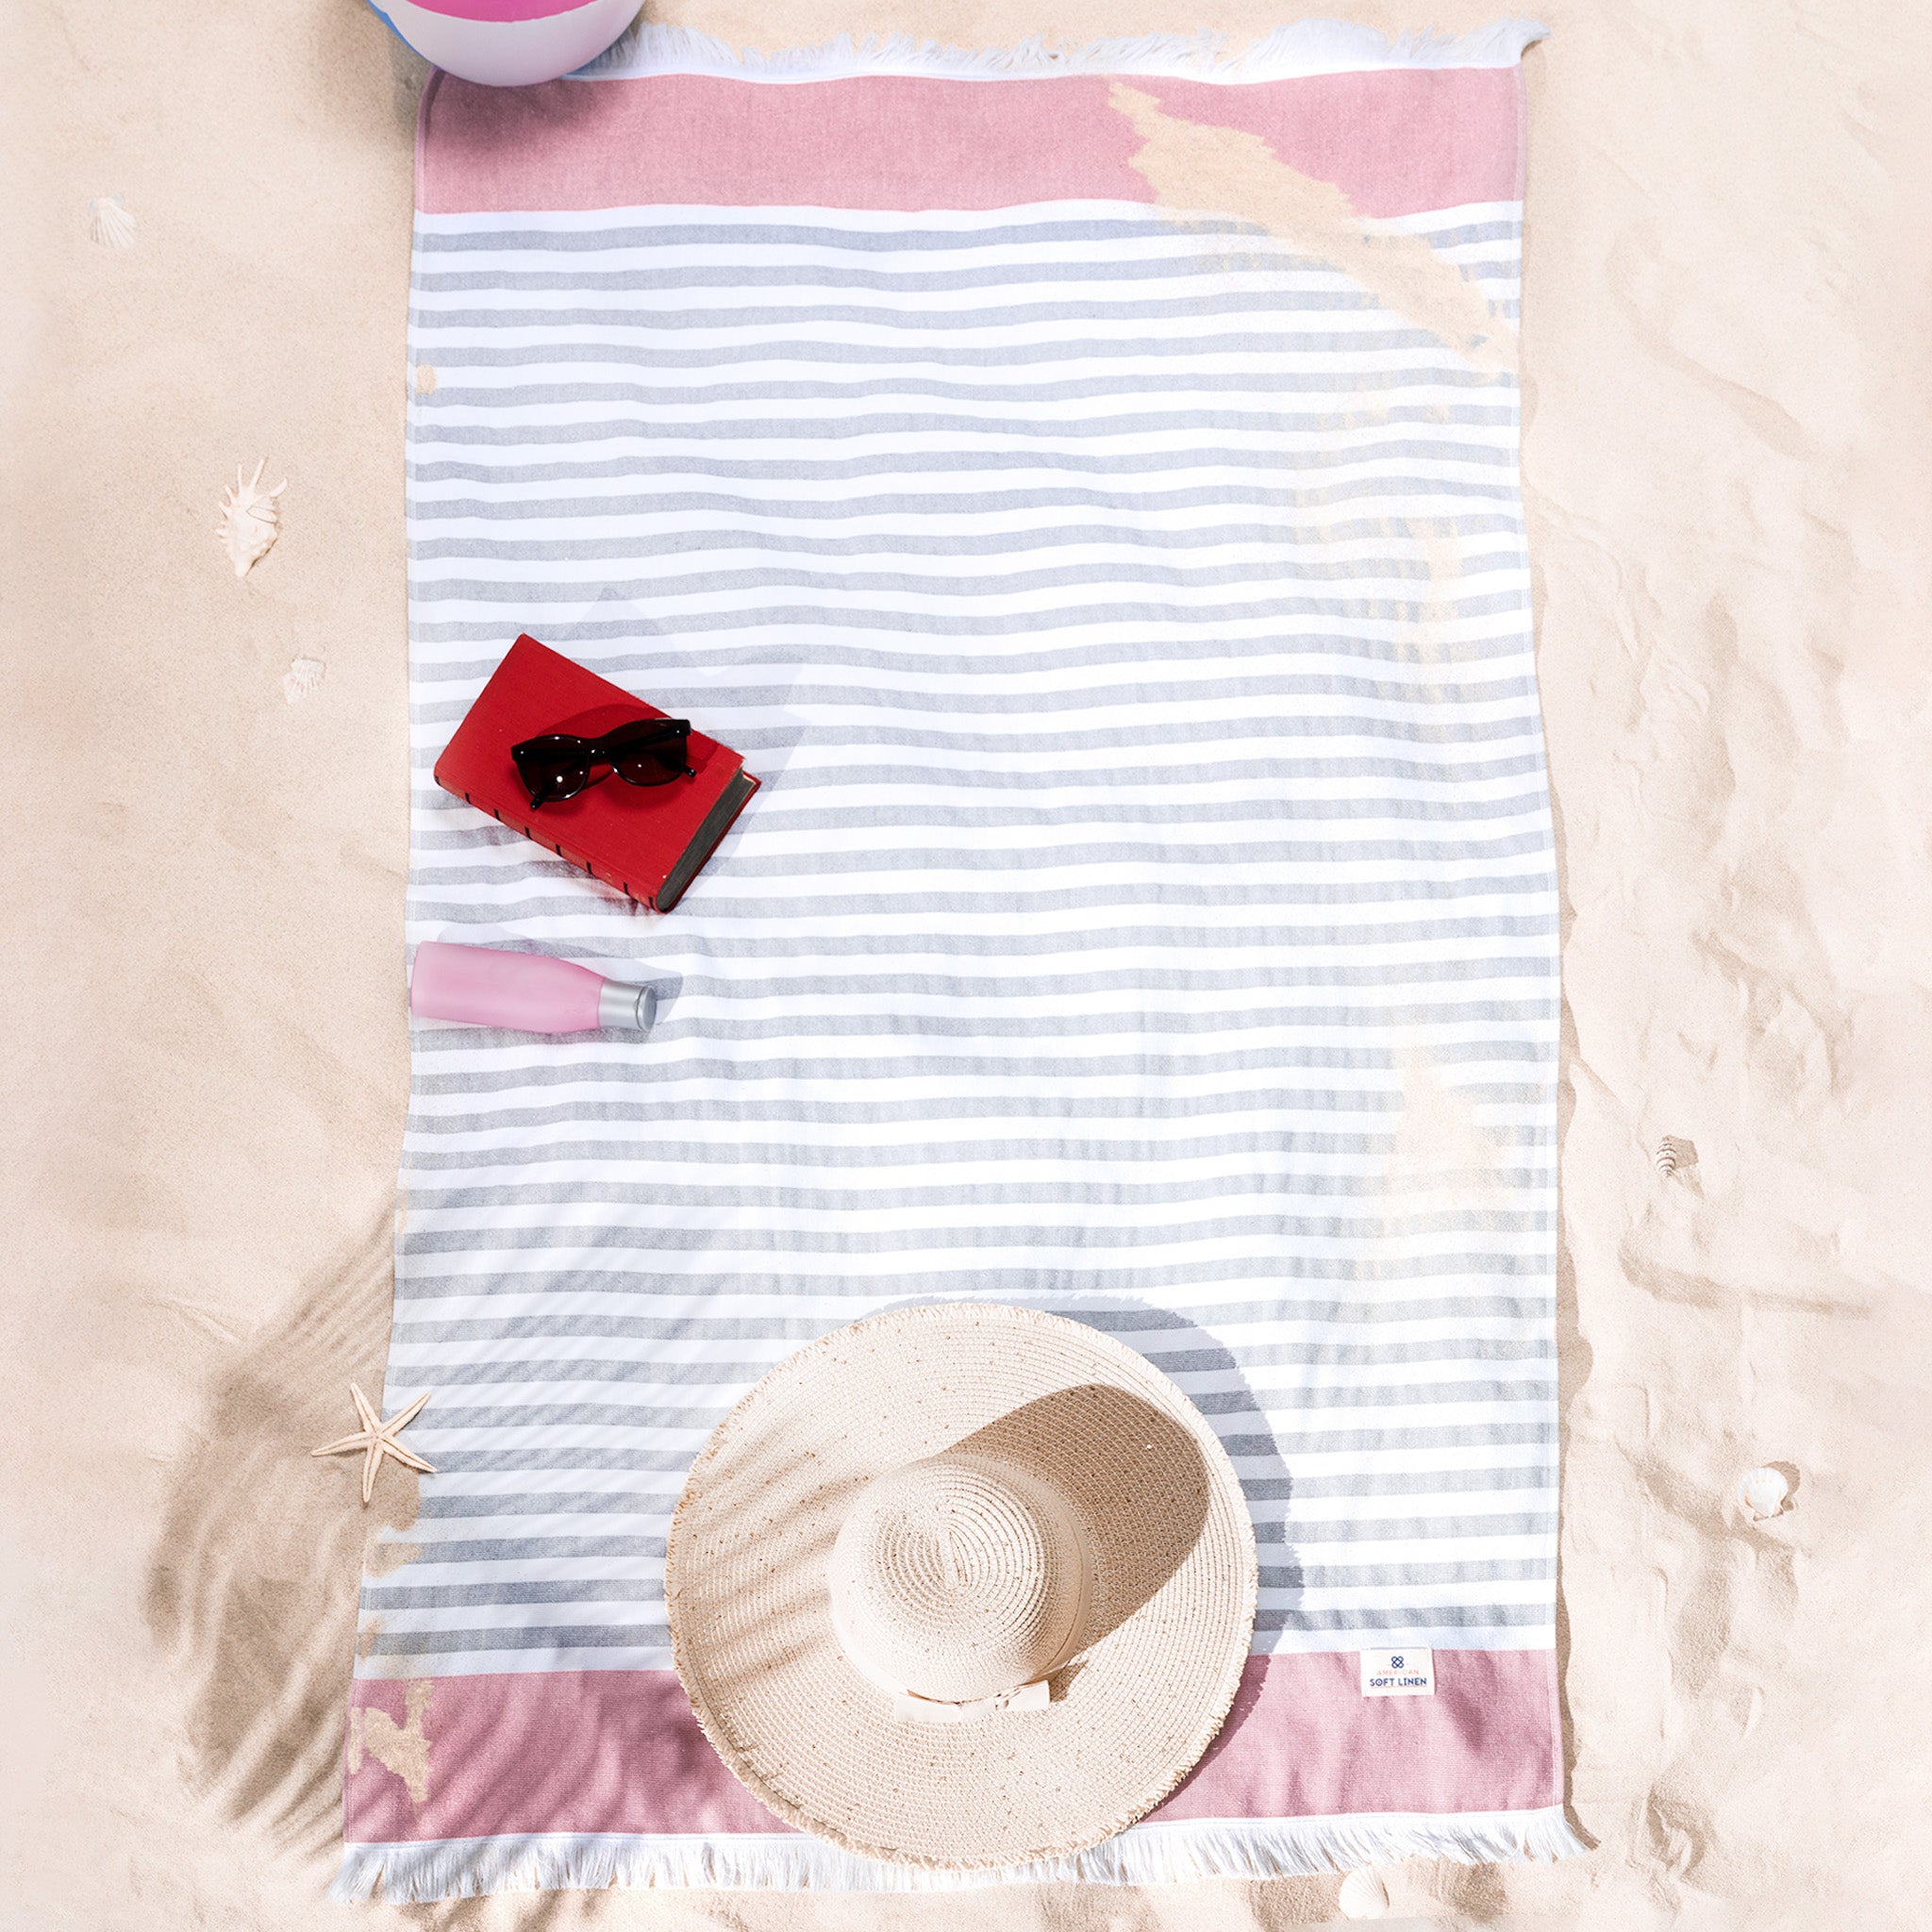 4 Packed 100% Cotton Terry Peshtemal & Beach Towel Rose-06